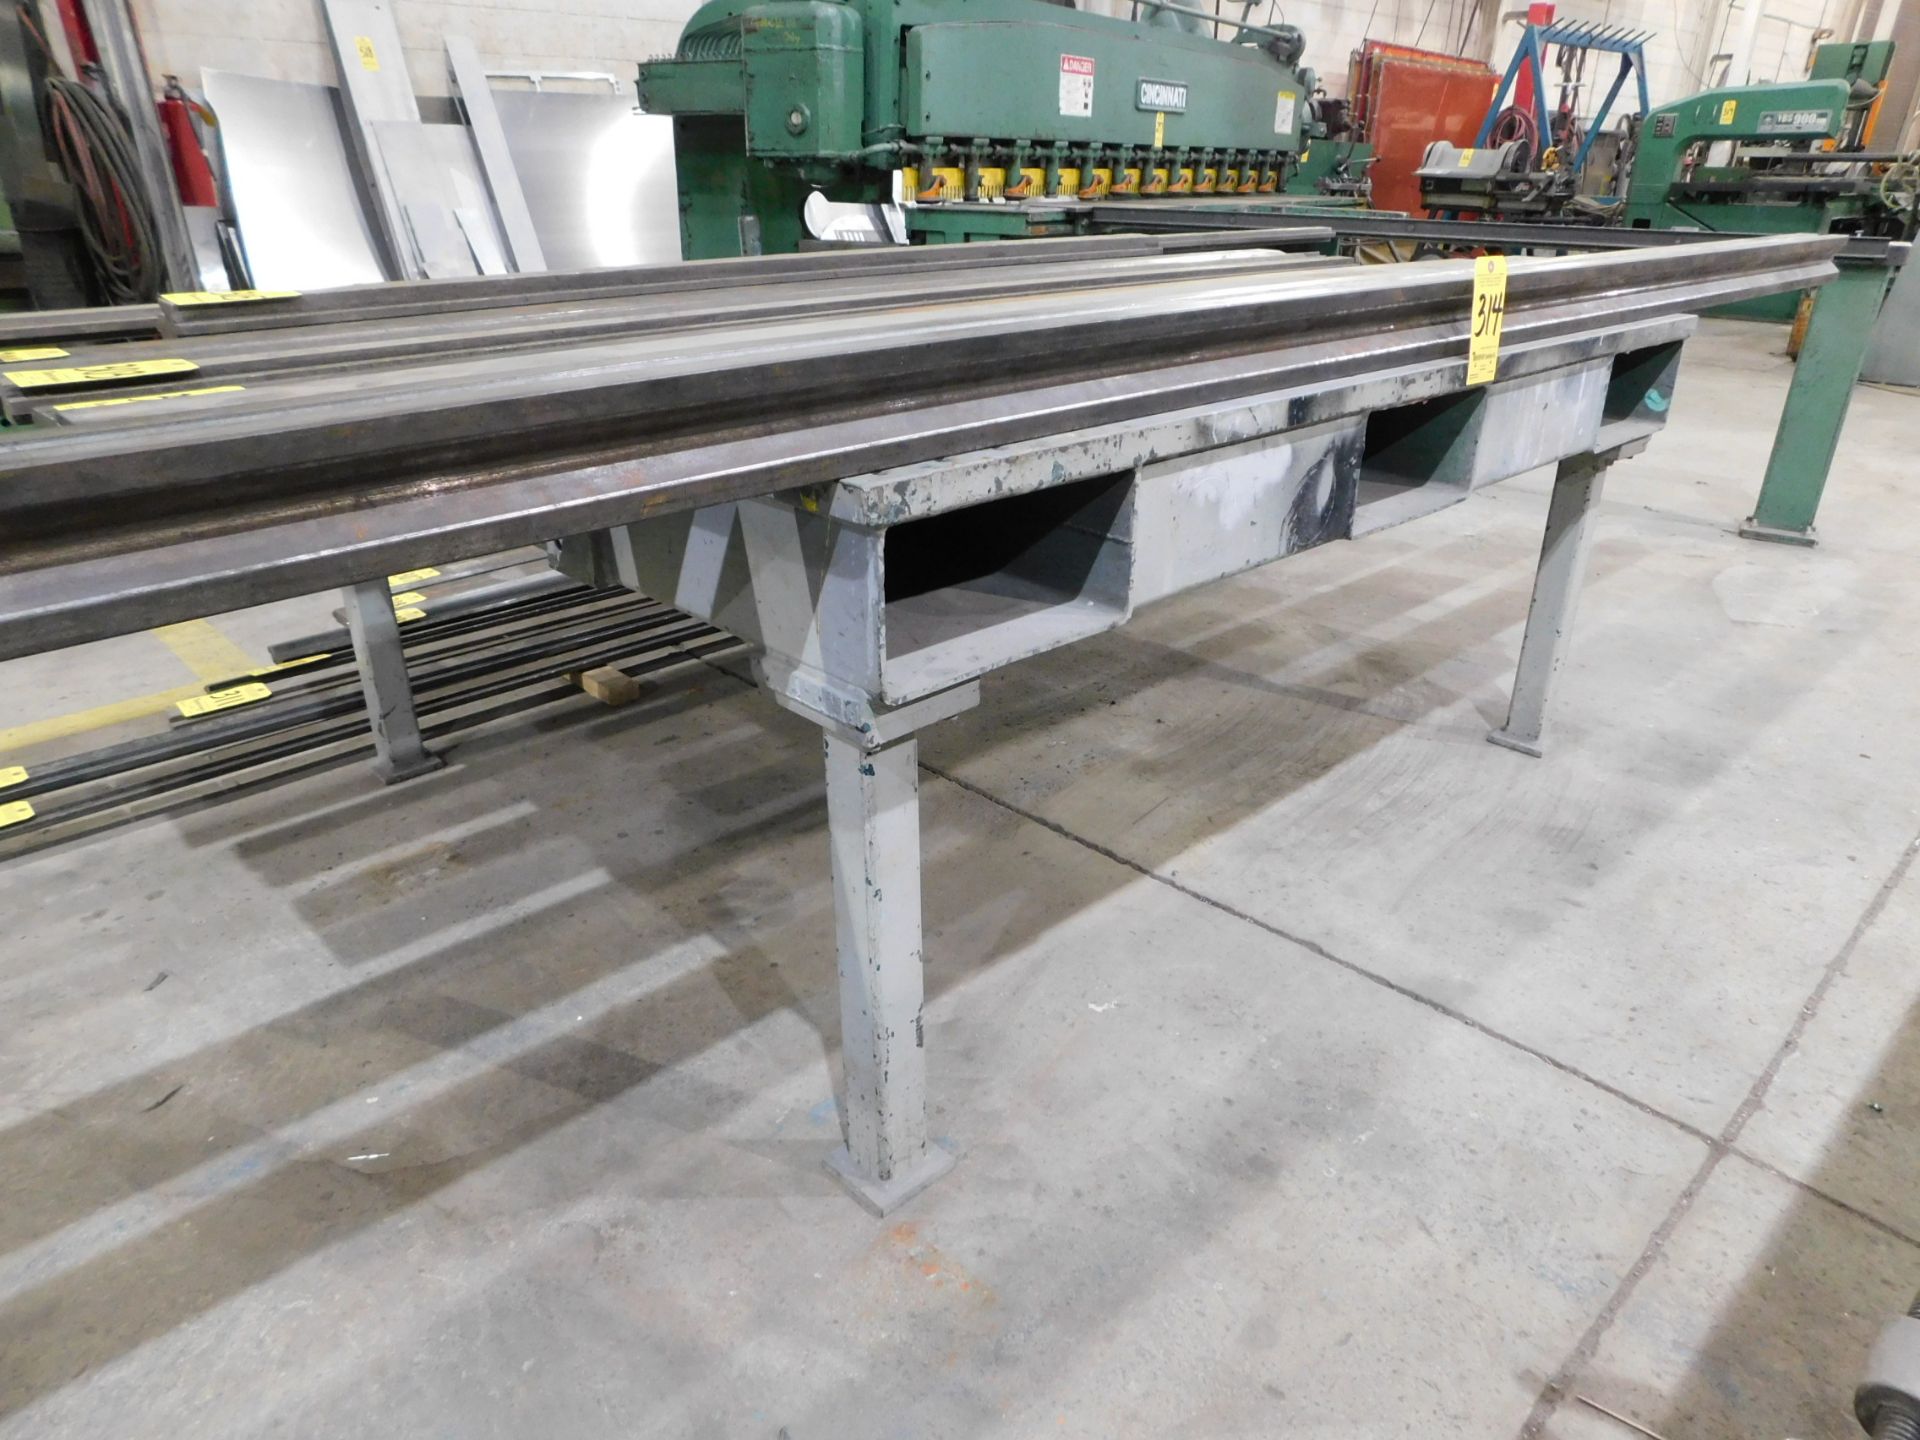 Heavy Duty Steel Welding Table, 60" X 68" X 30" High, 1 1/4" Thick Steel Top